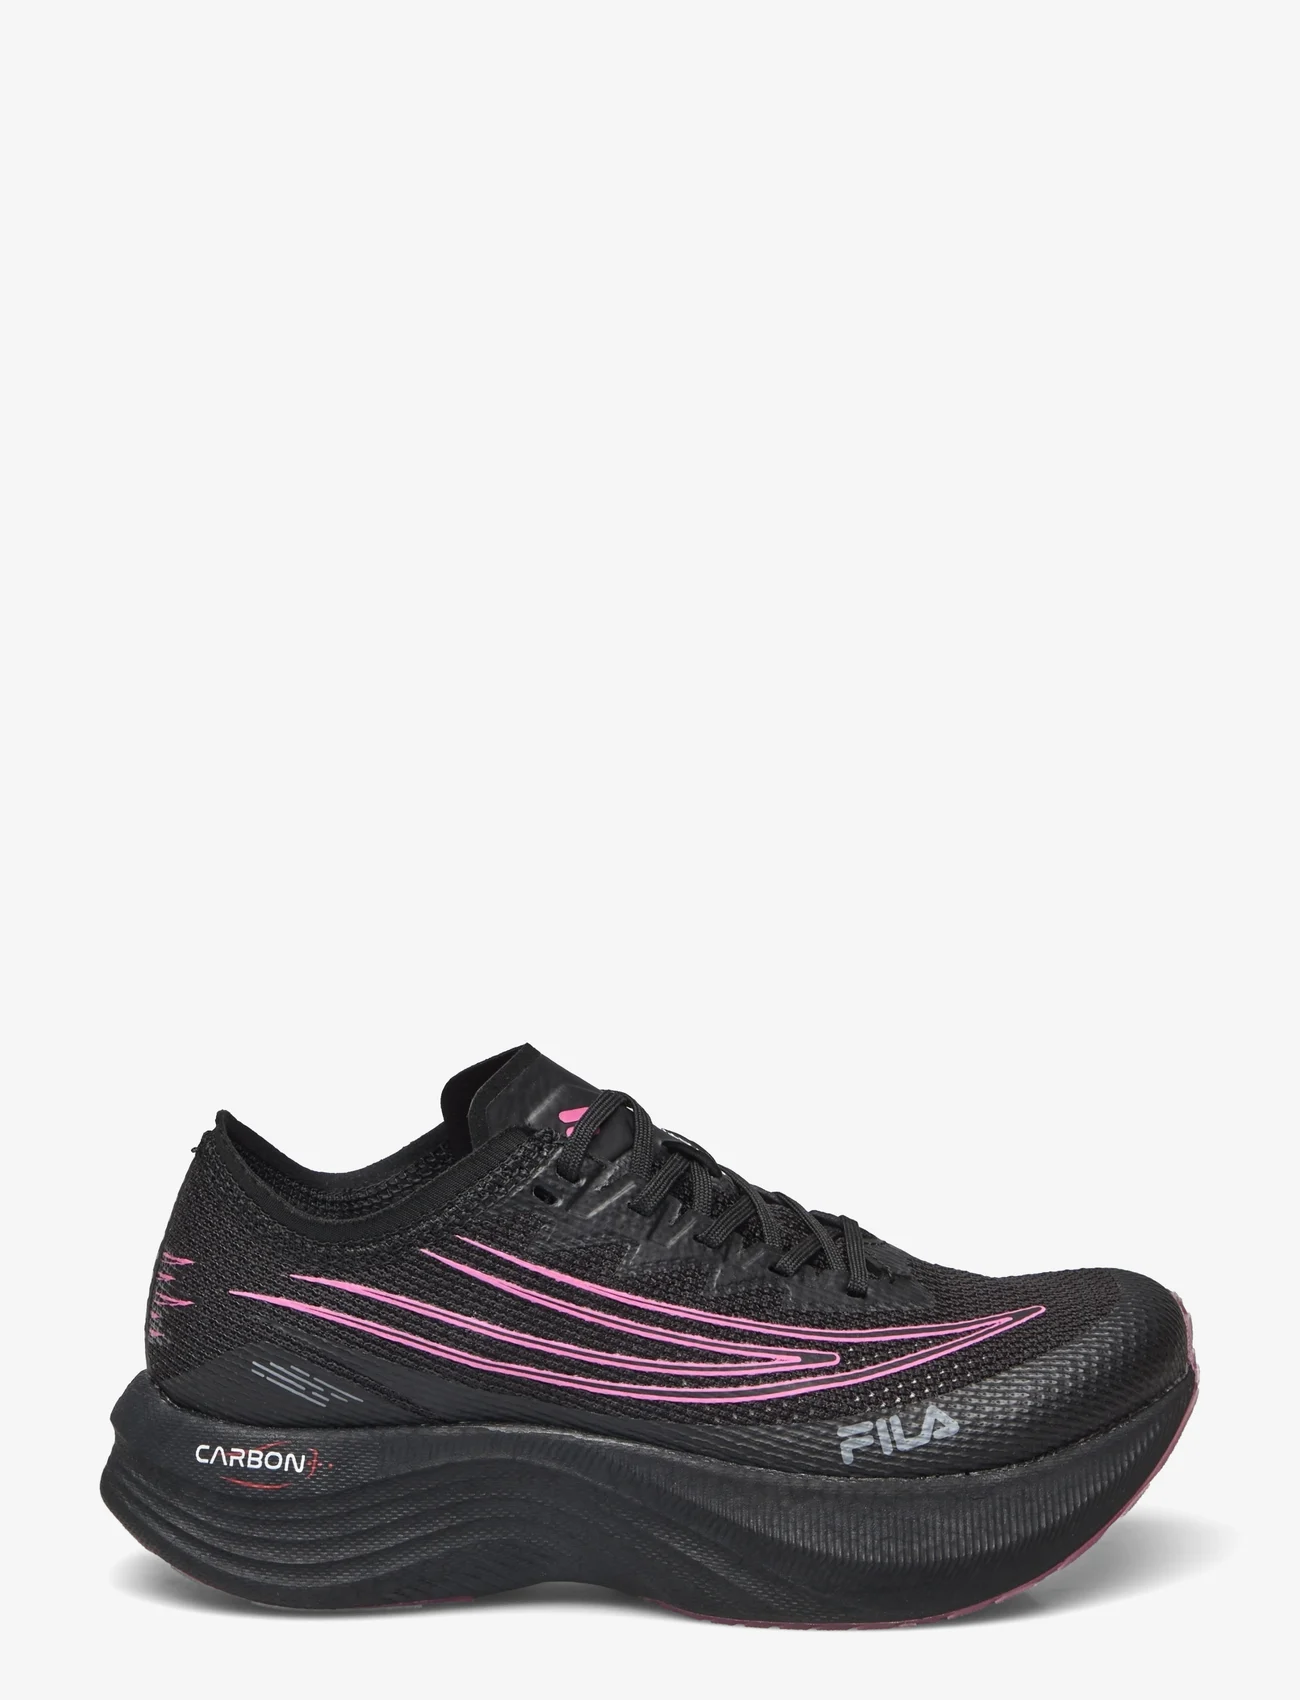 FILA - FILA ASTATINE wmn - running shoes - black-phantom - 1